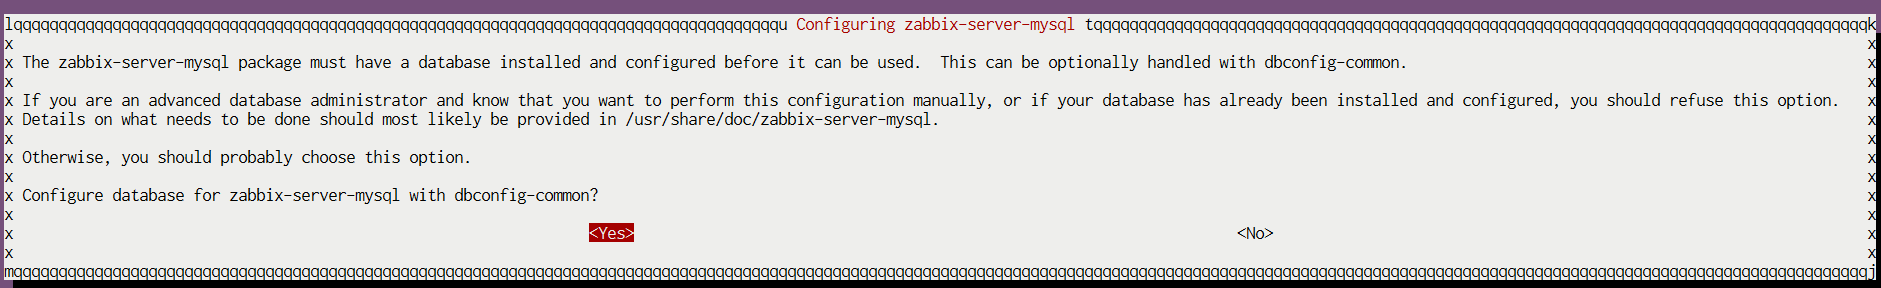 Zabbix-MySQL